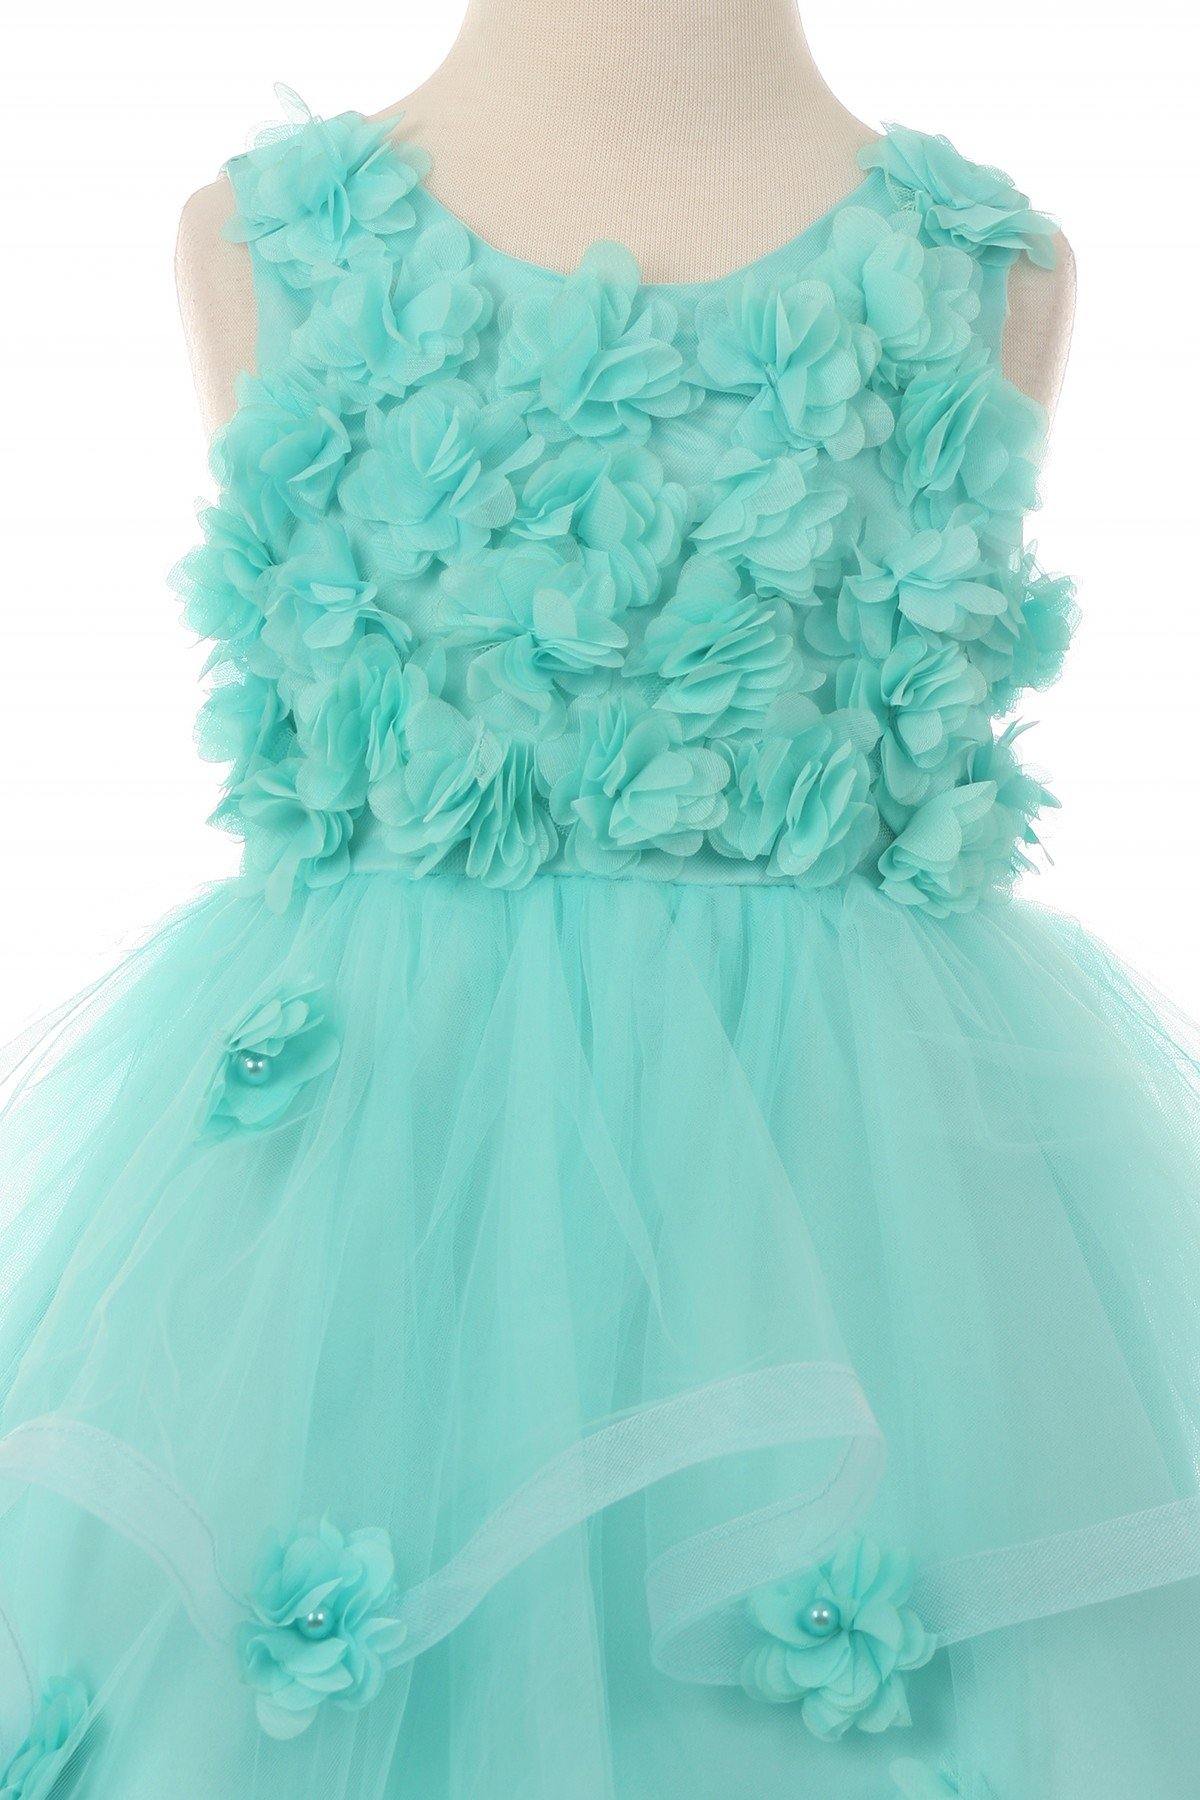 Sleeveless Embellished Short Party Flower Girls Dress | Dress Outlet ...